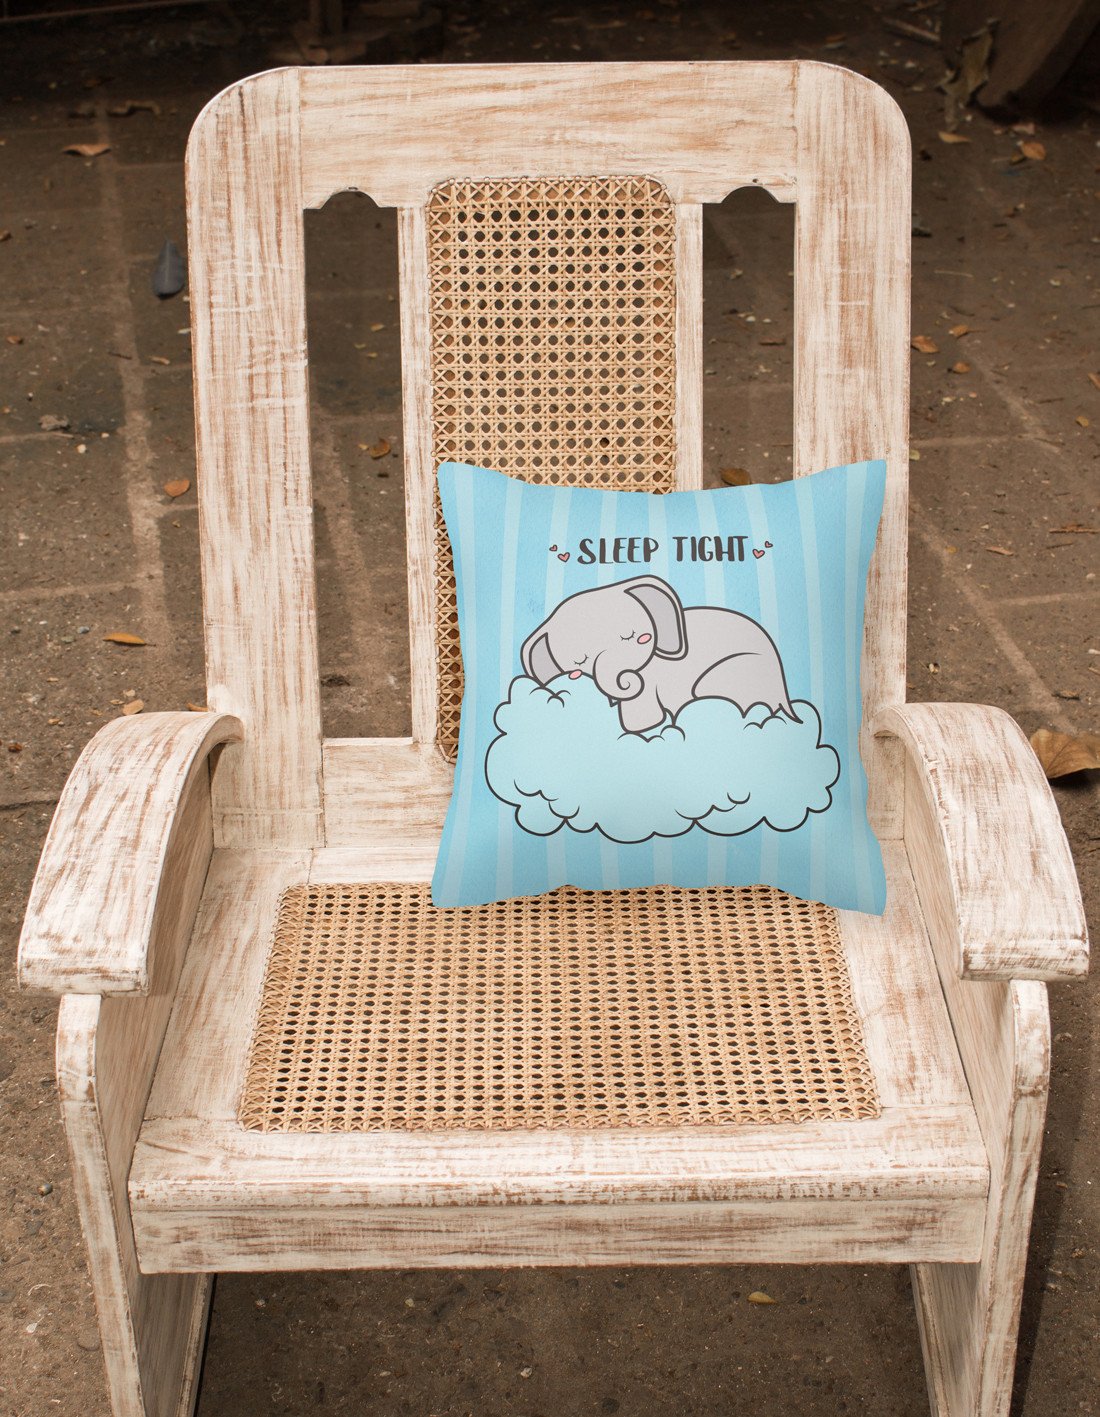 Nursery Sleep Tight Elephant Fabric Decorative Pillow BB7475PW1818 by Caroline's Treasures